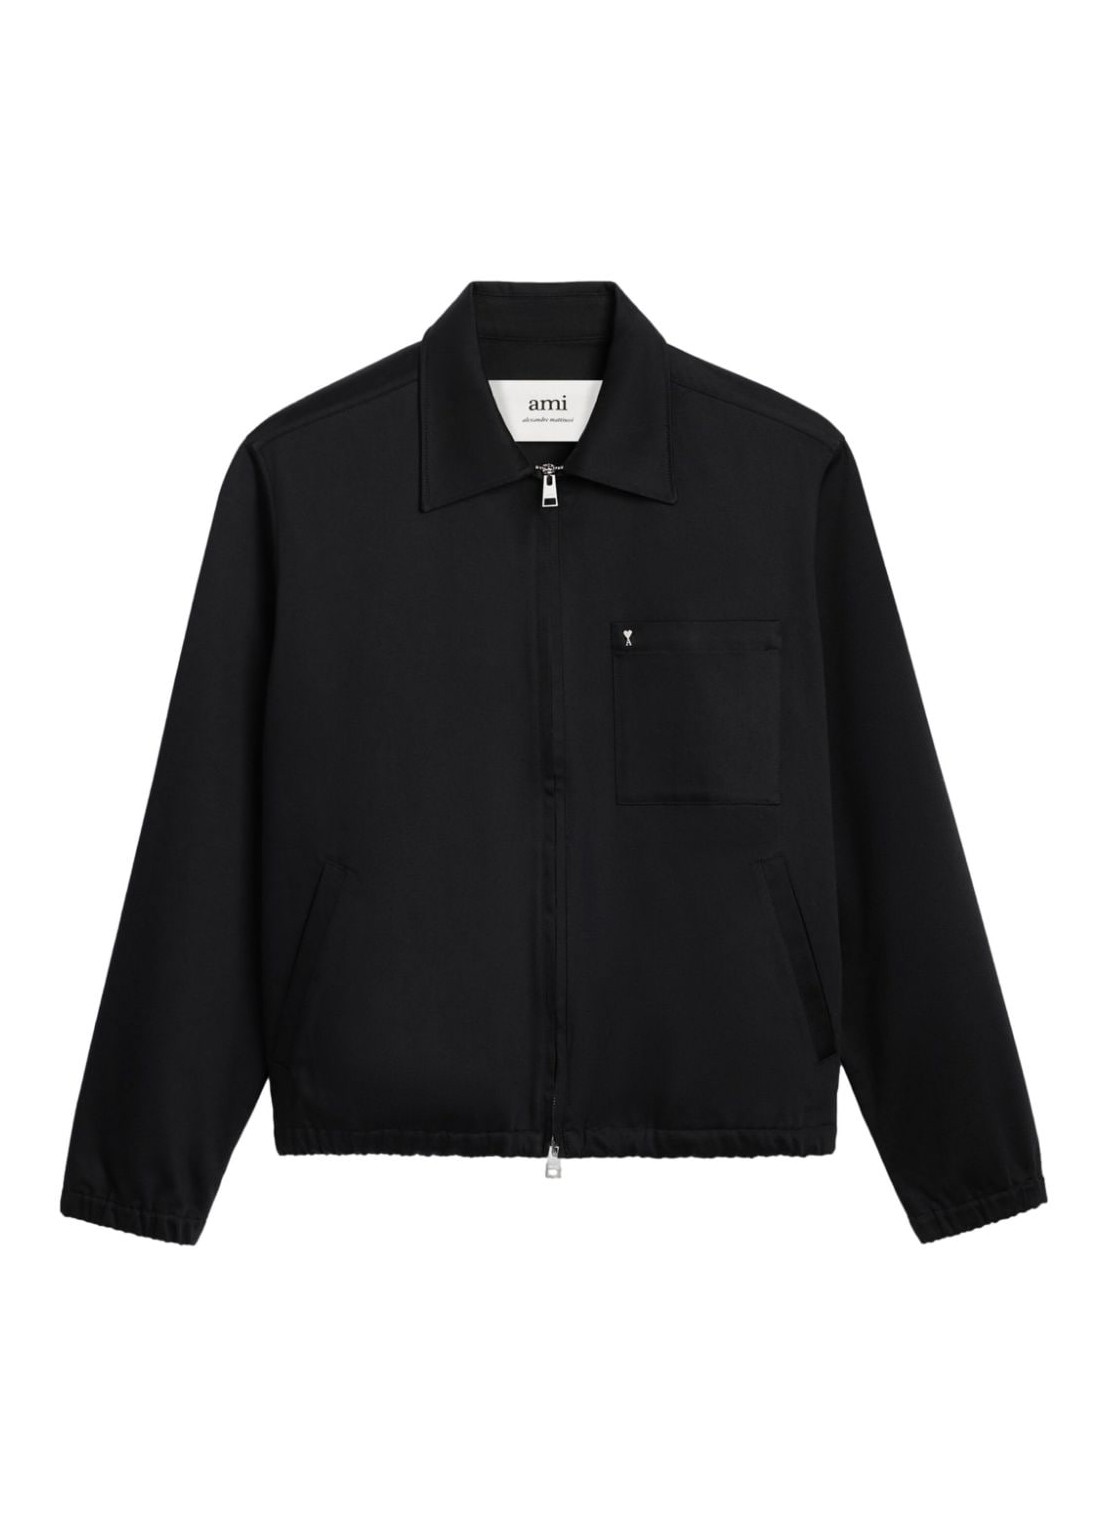 Outerwear ami outerwear manadc zipped jacket - hjk053co0009 001 talla L
 